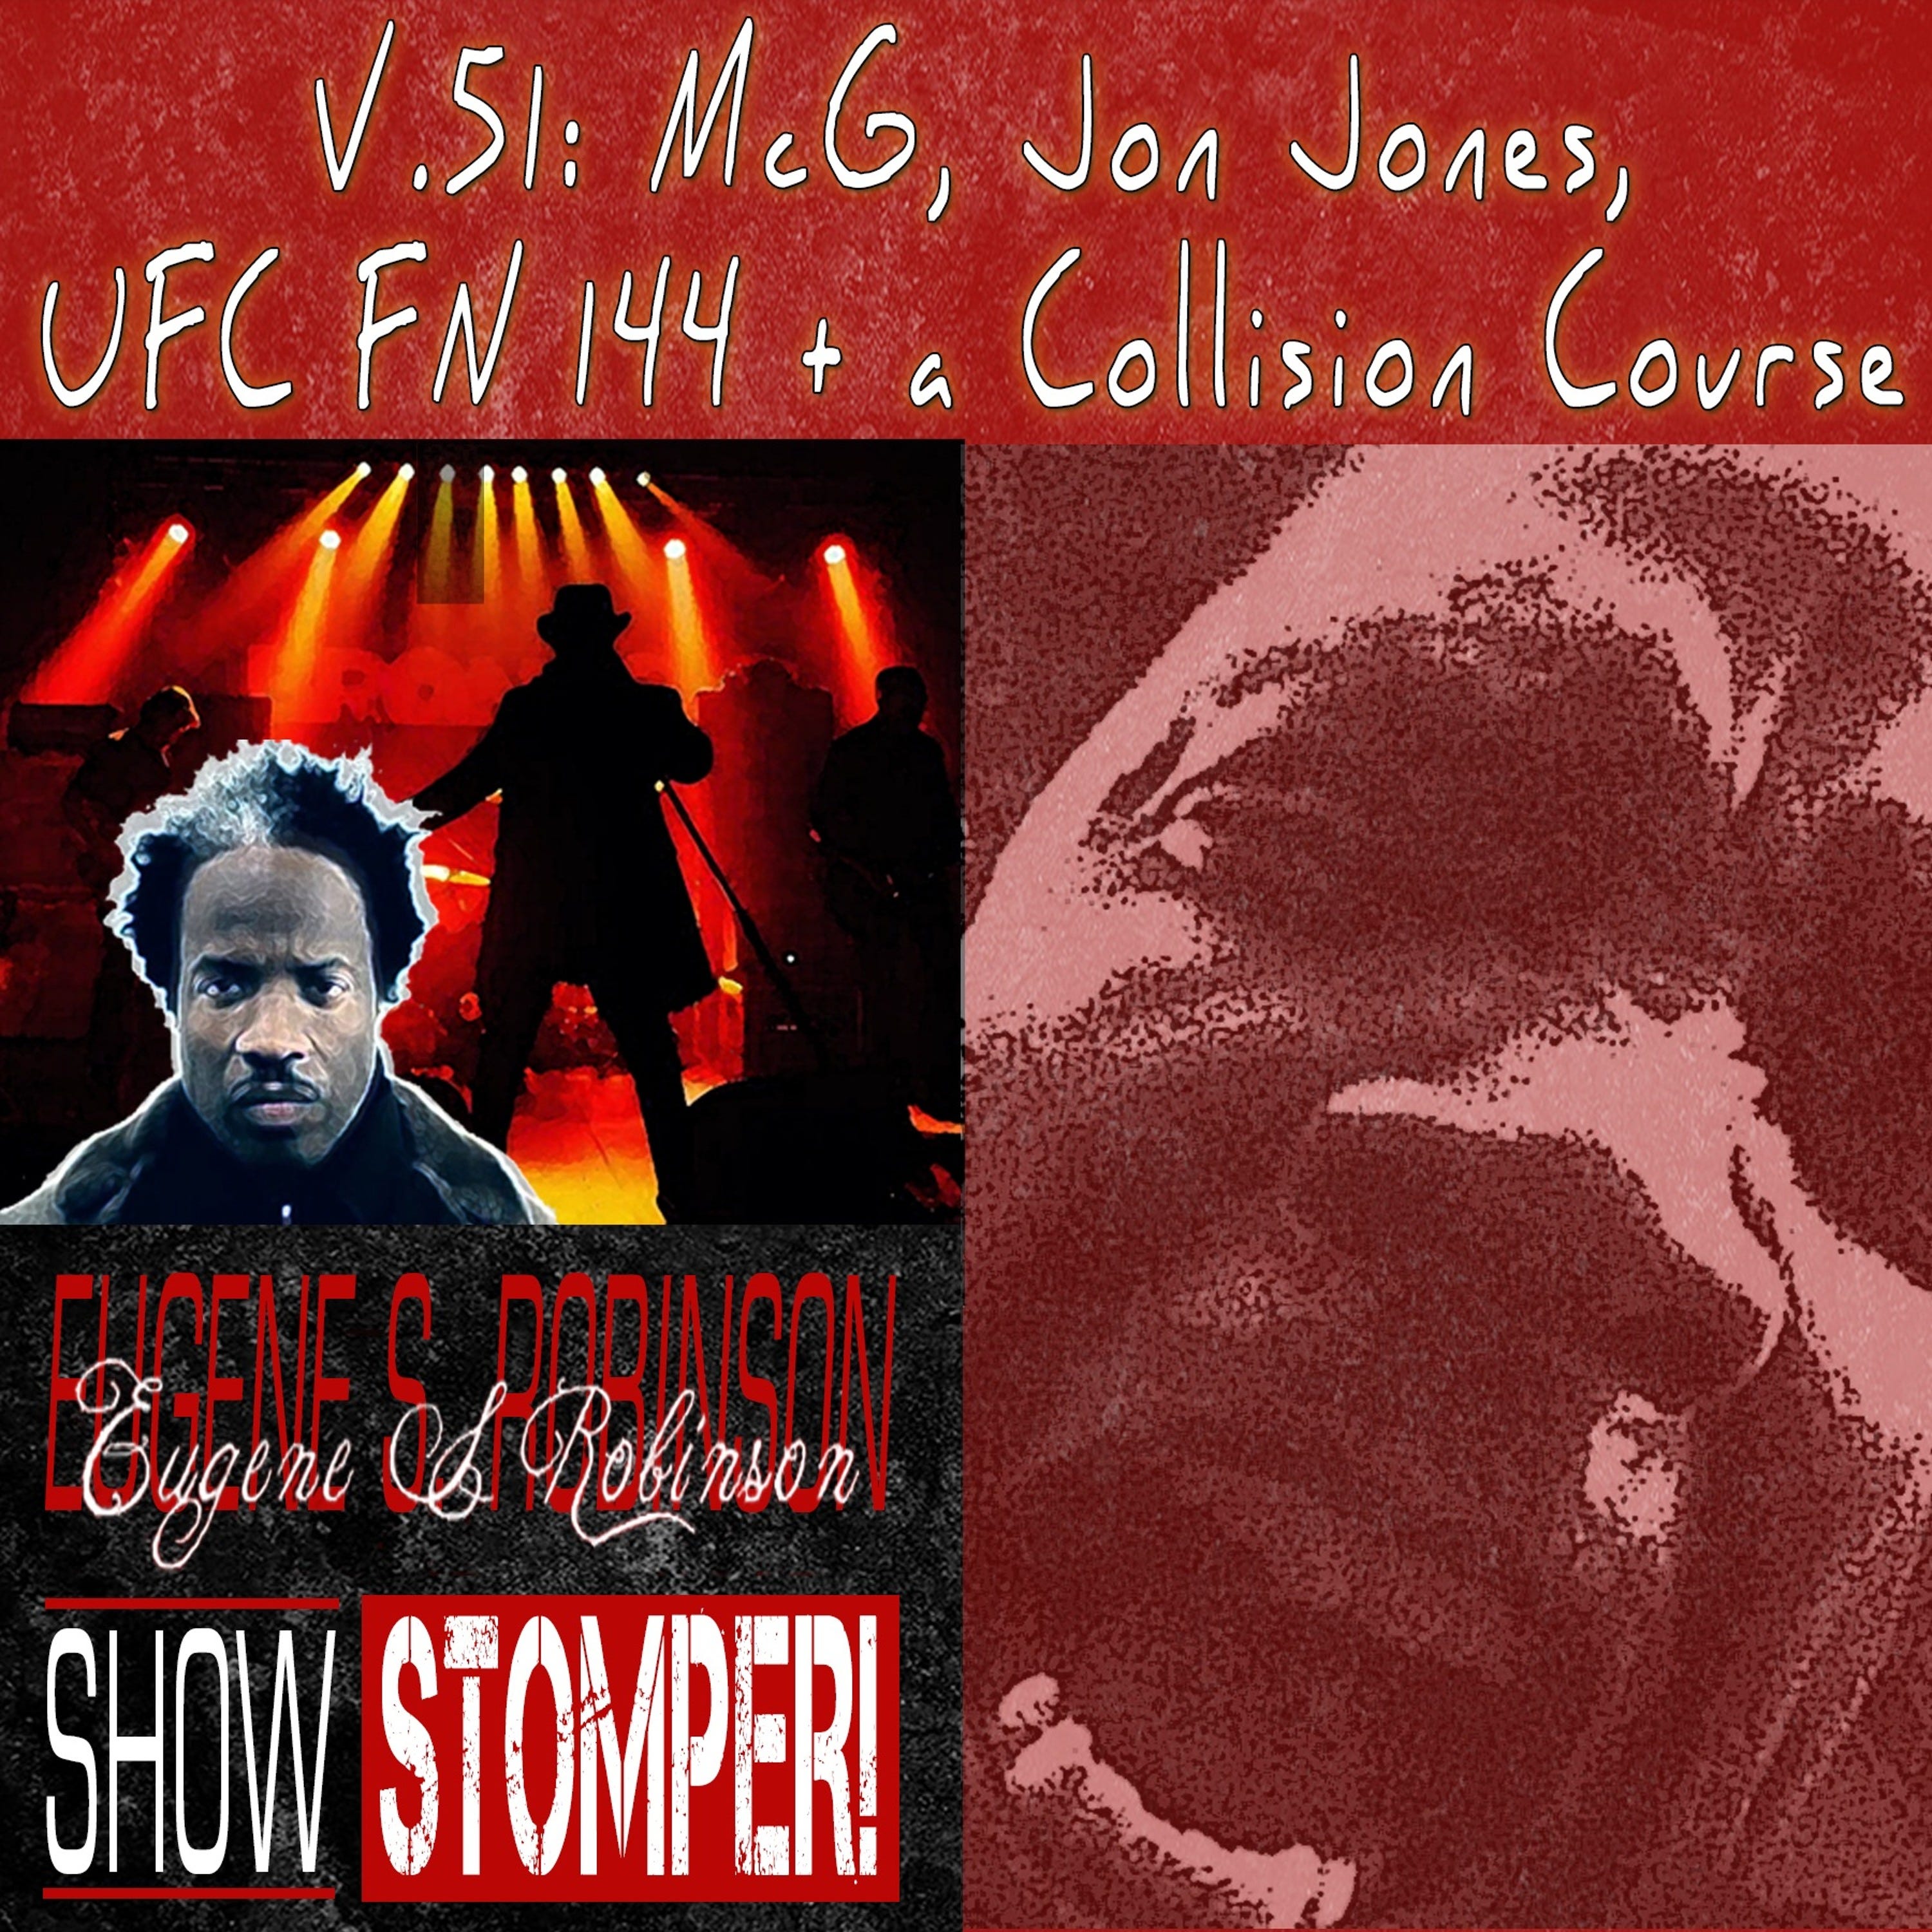 V.51 McG, Jon Jones, UFC FN 144 + A Collision Course on The Eugene S. Robinson Show Stomper!